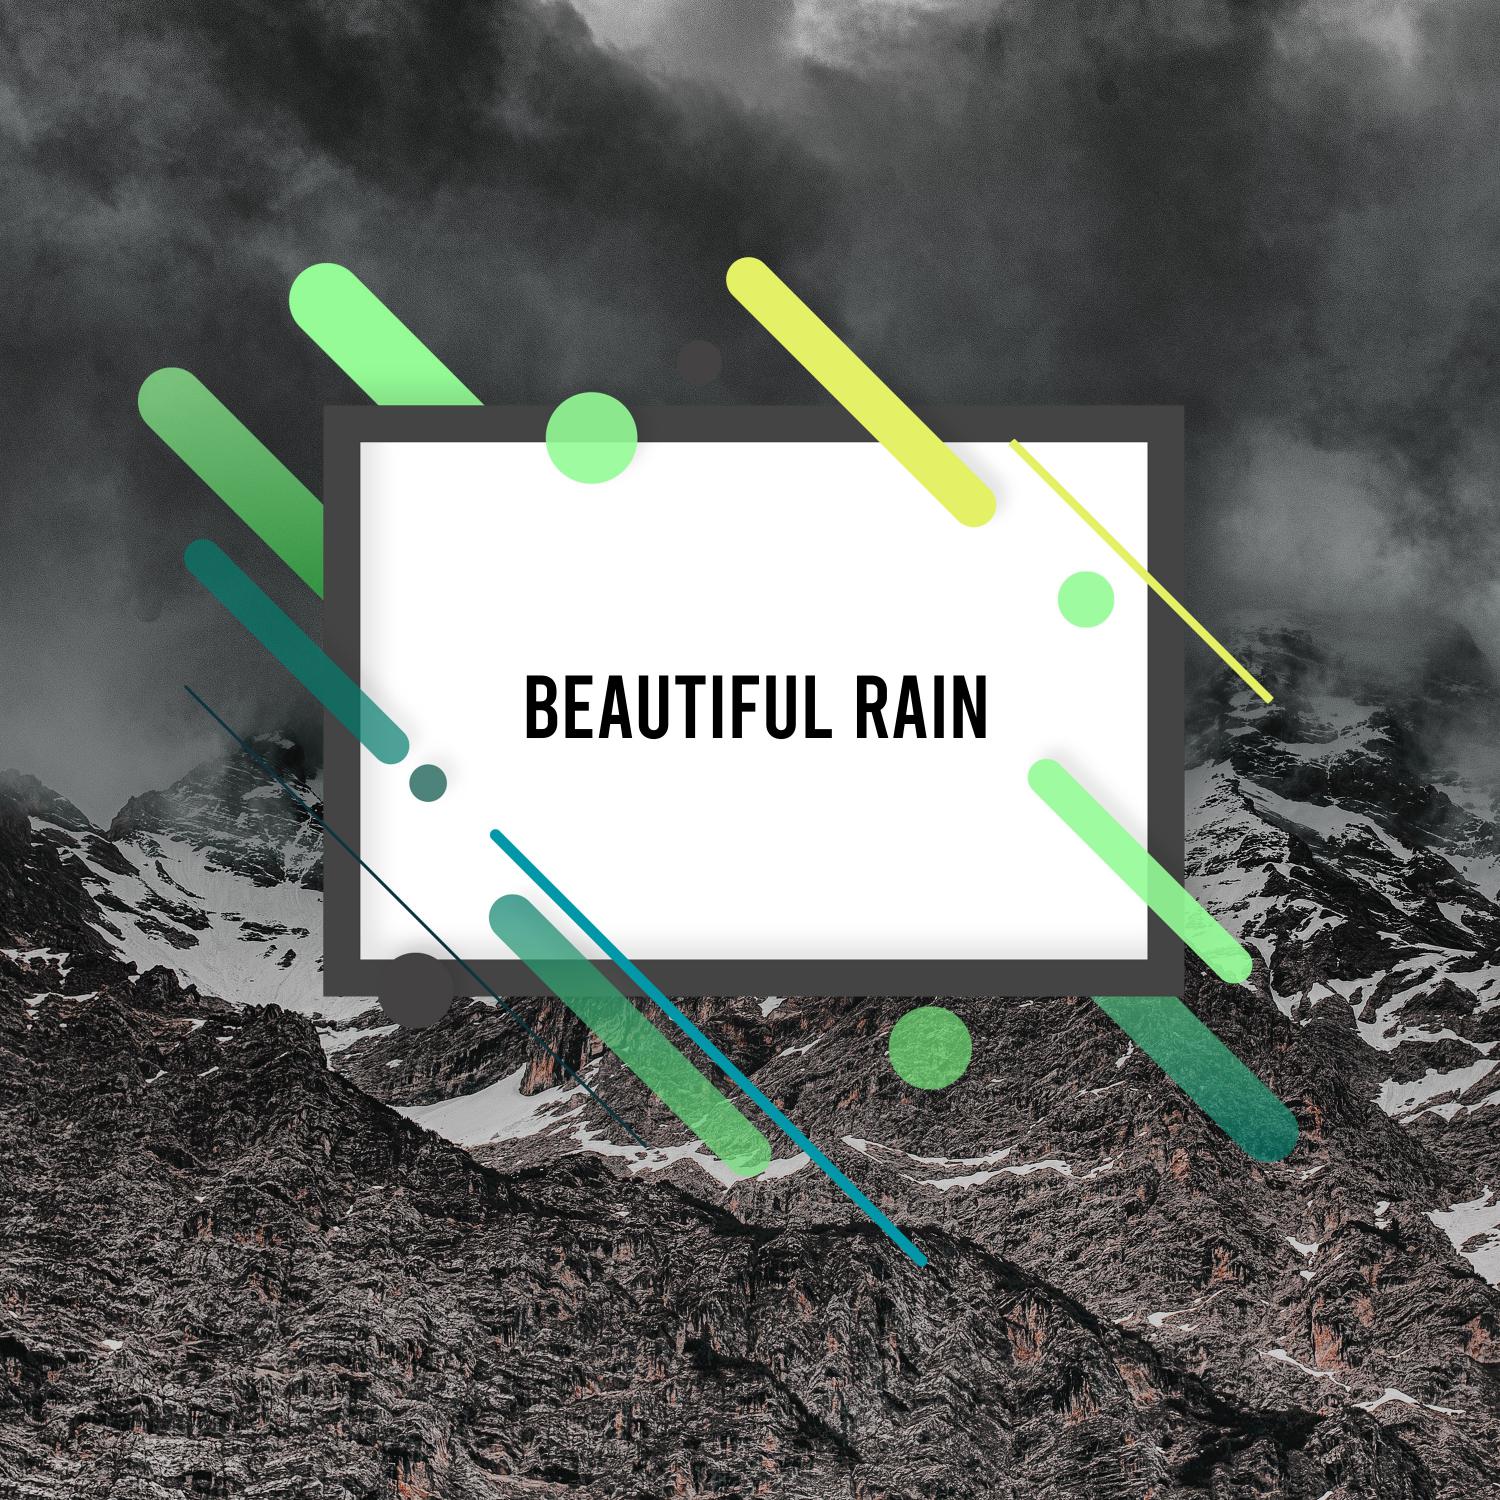 20 Beautiful Rain Sounds - Natural Rain Noise for Sleep, Meditation, Study, Yoga or Spa